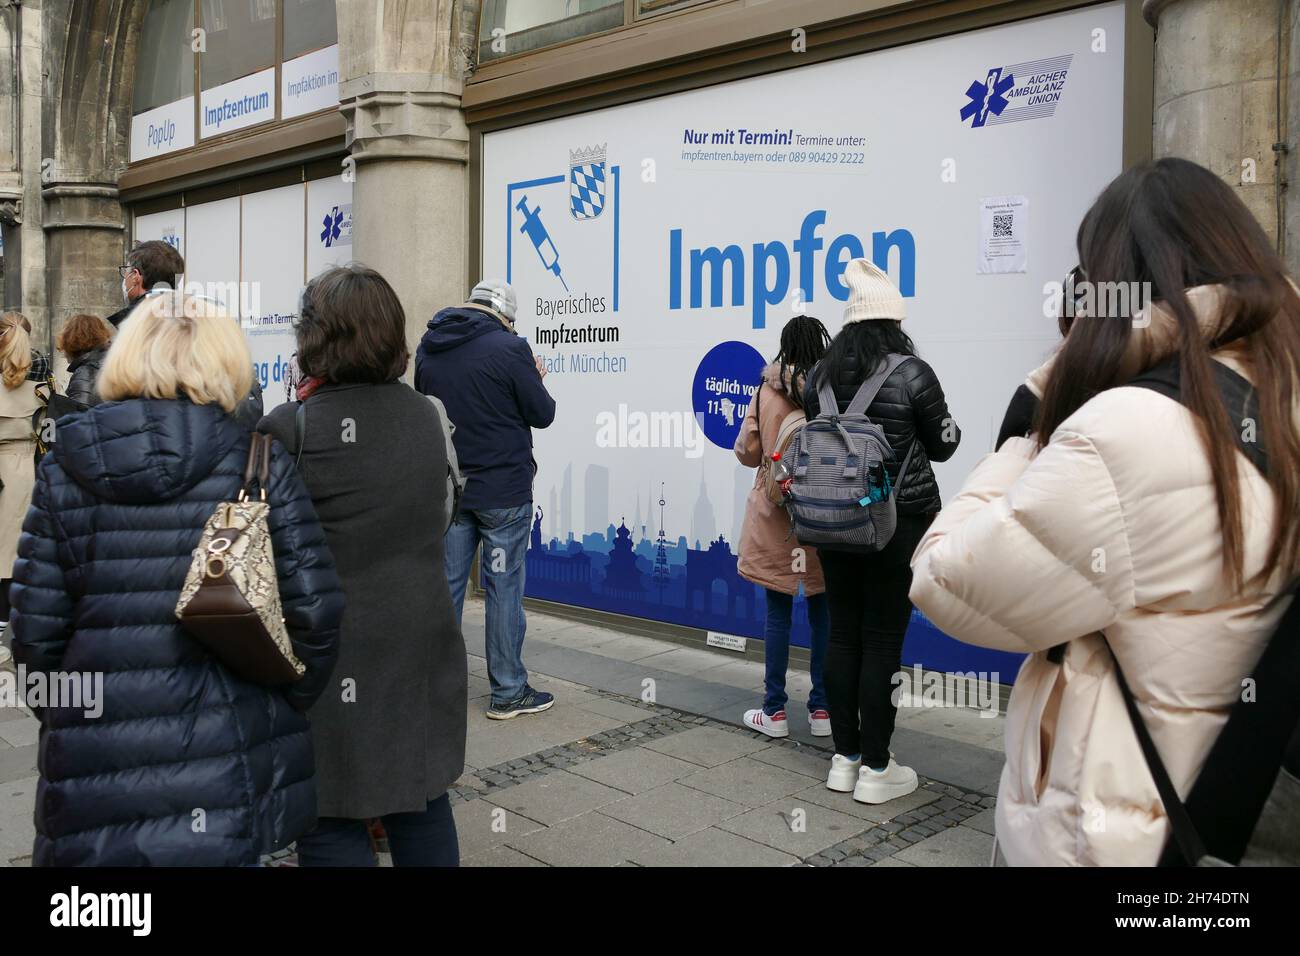 Pop up corona vaccination centre, people lining up for first immunization, Marienplatz. Stock Photo